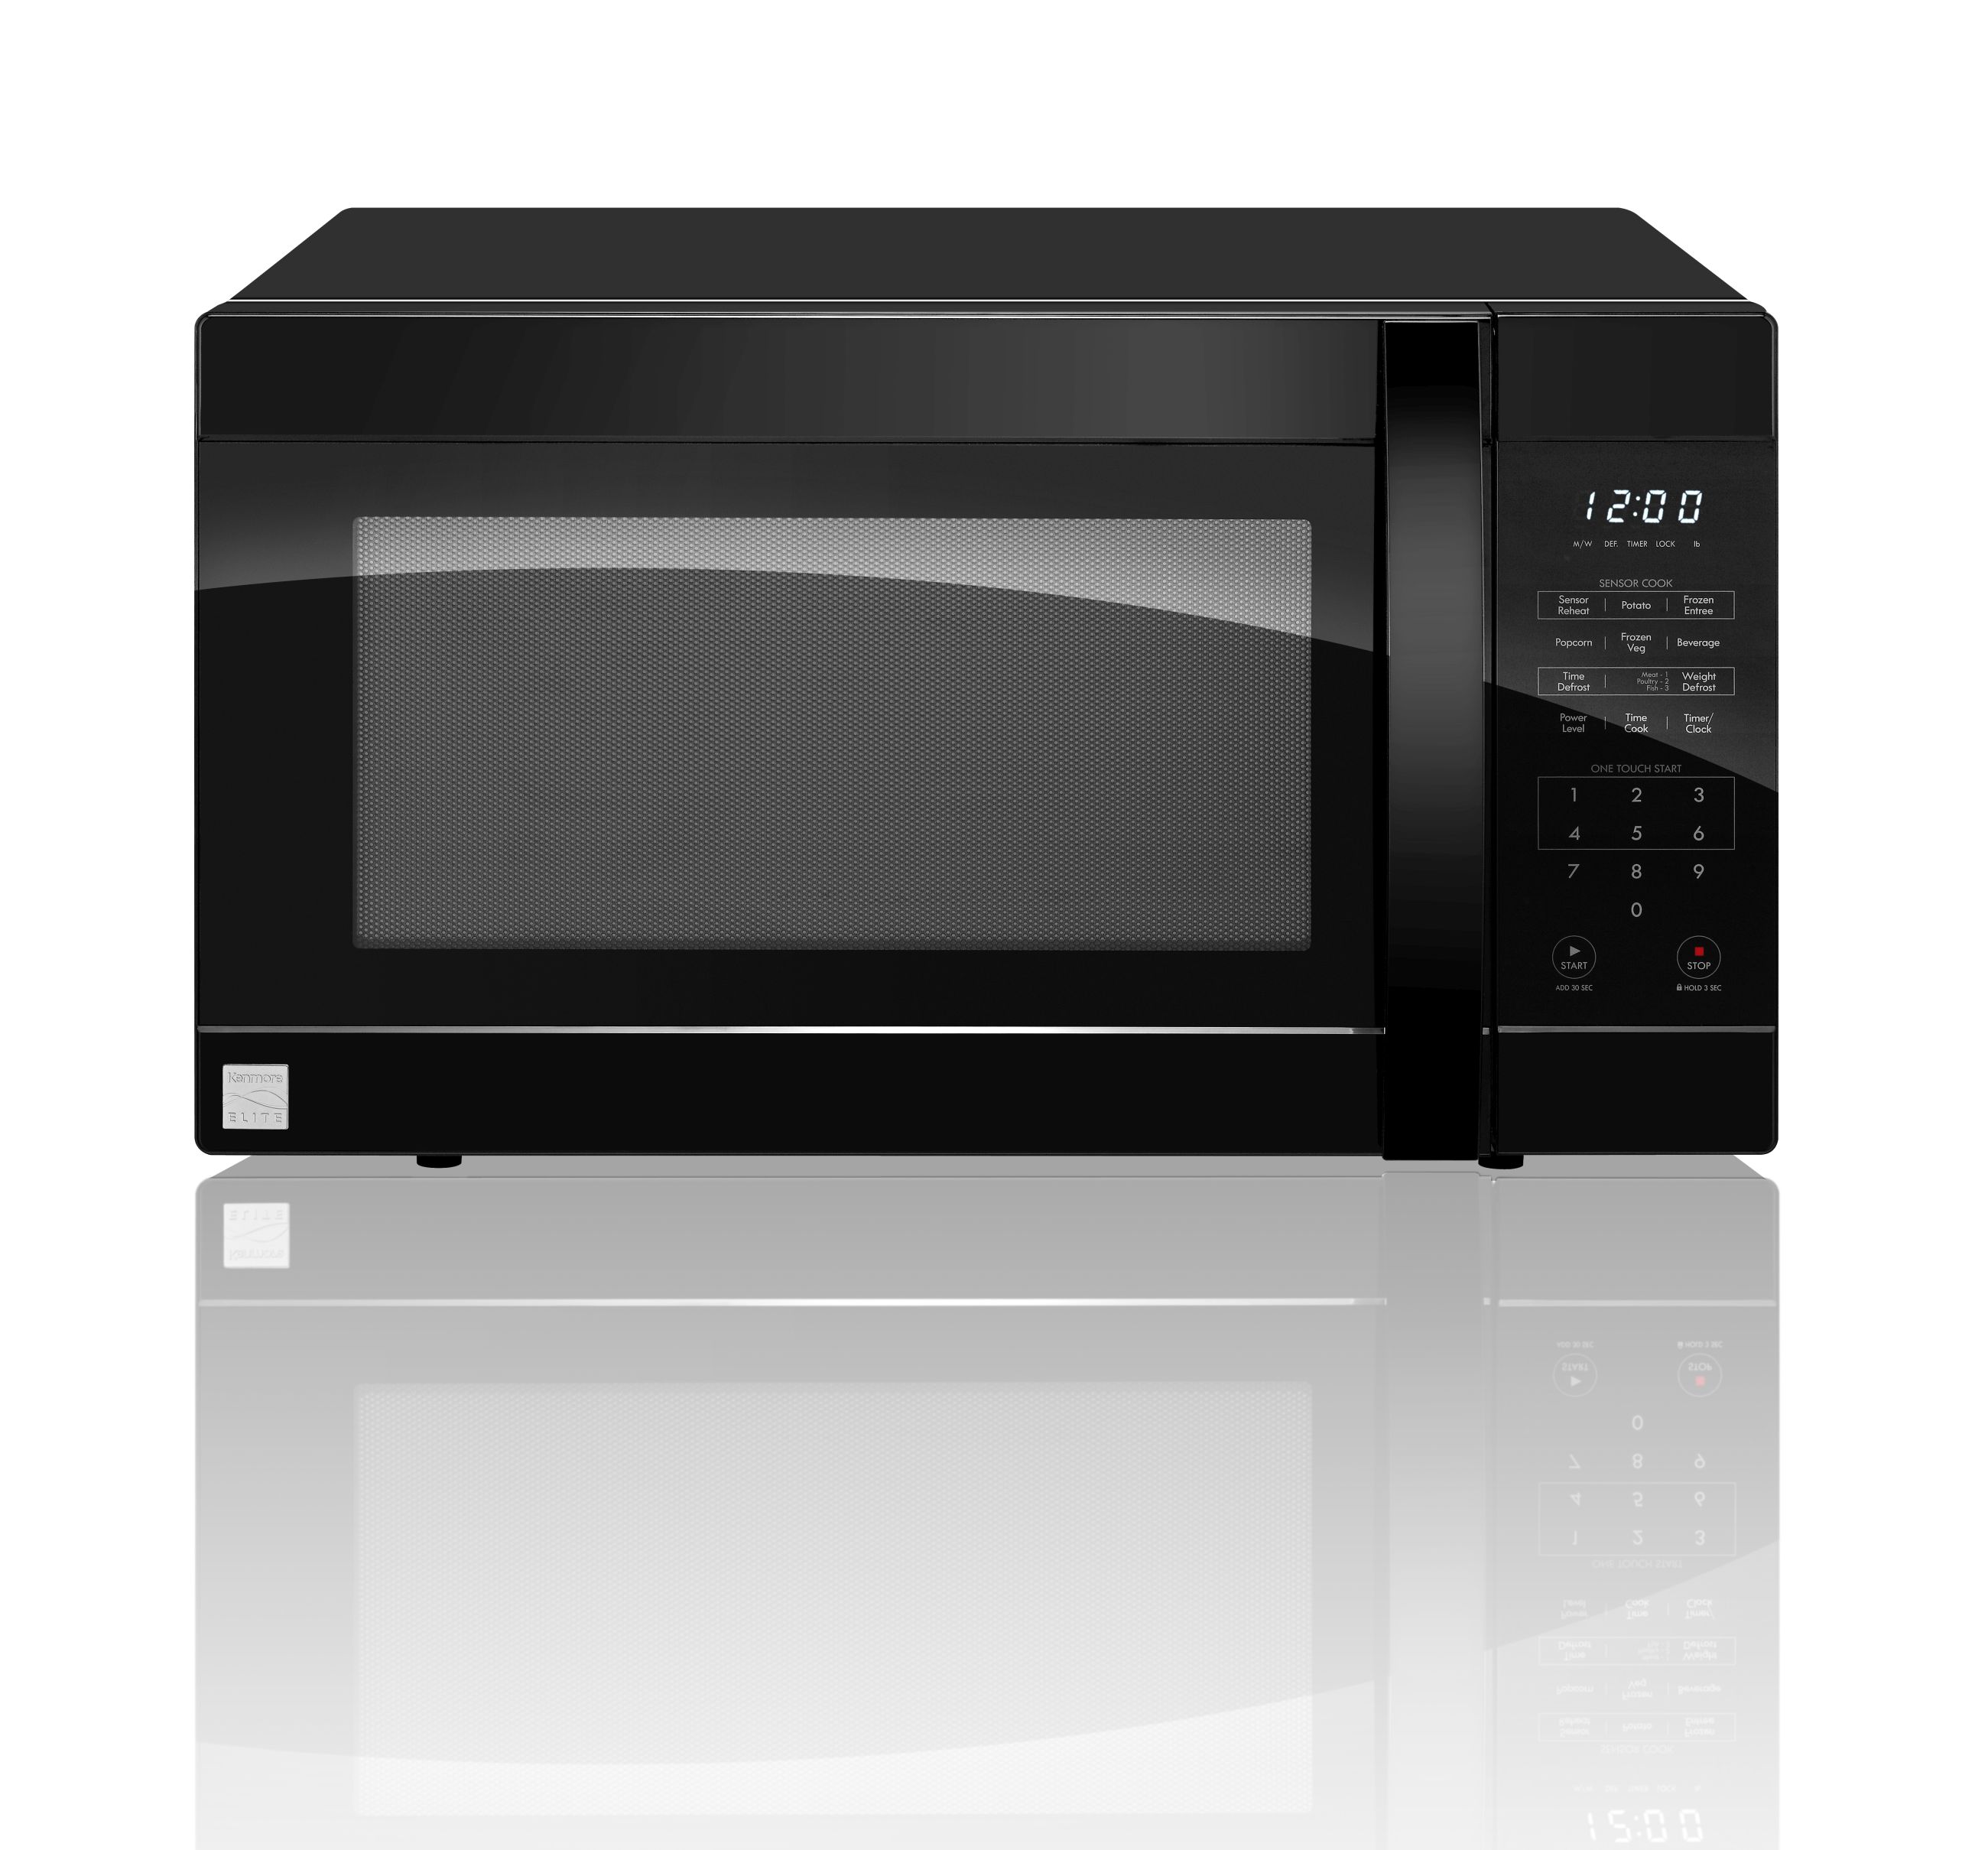 Kenmore Elite 72219 2.2 cu. ft. Countertop Microwave Oven - Black